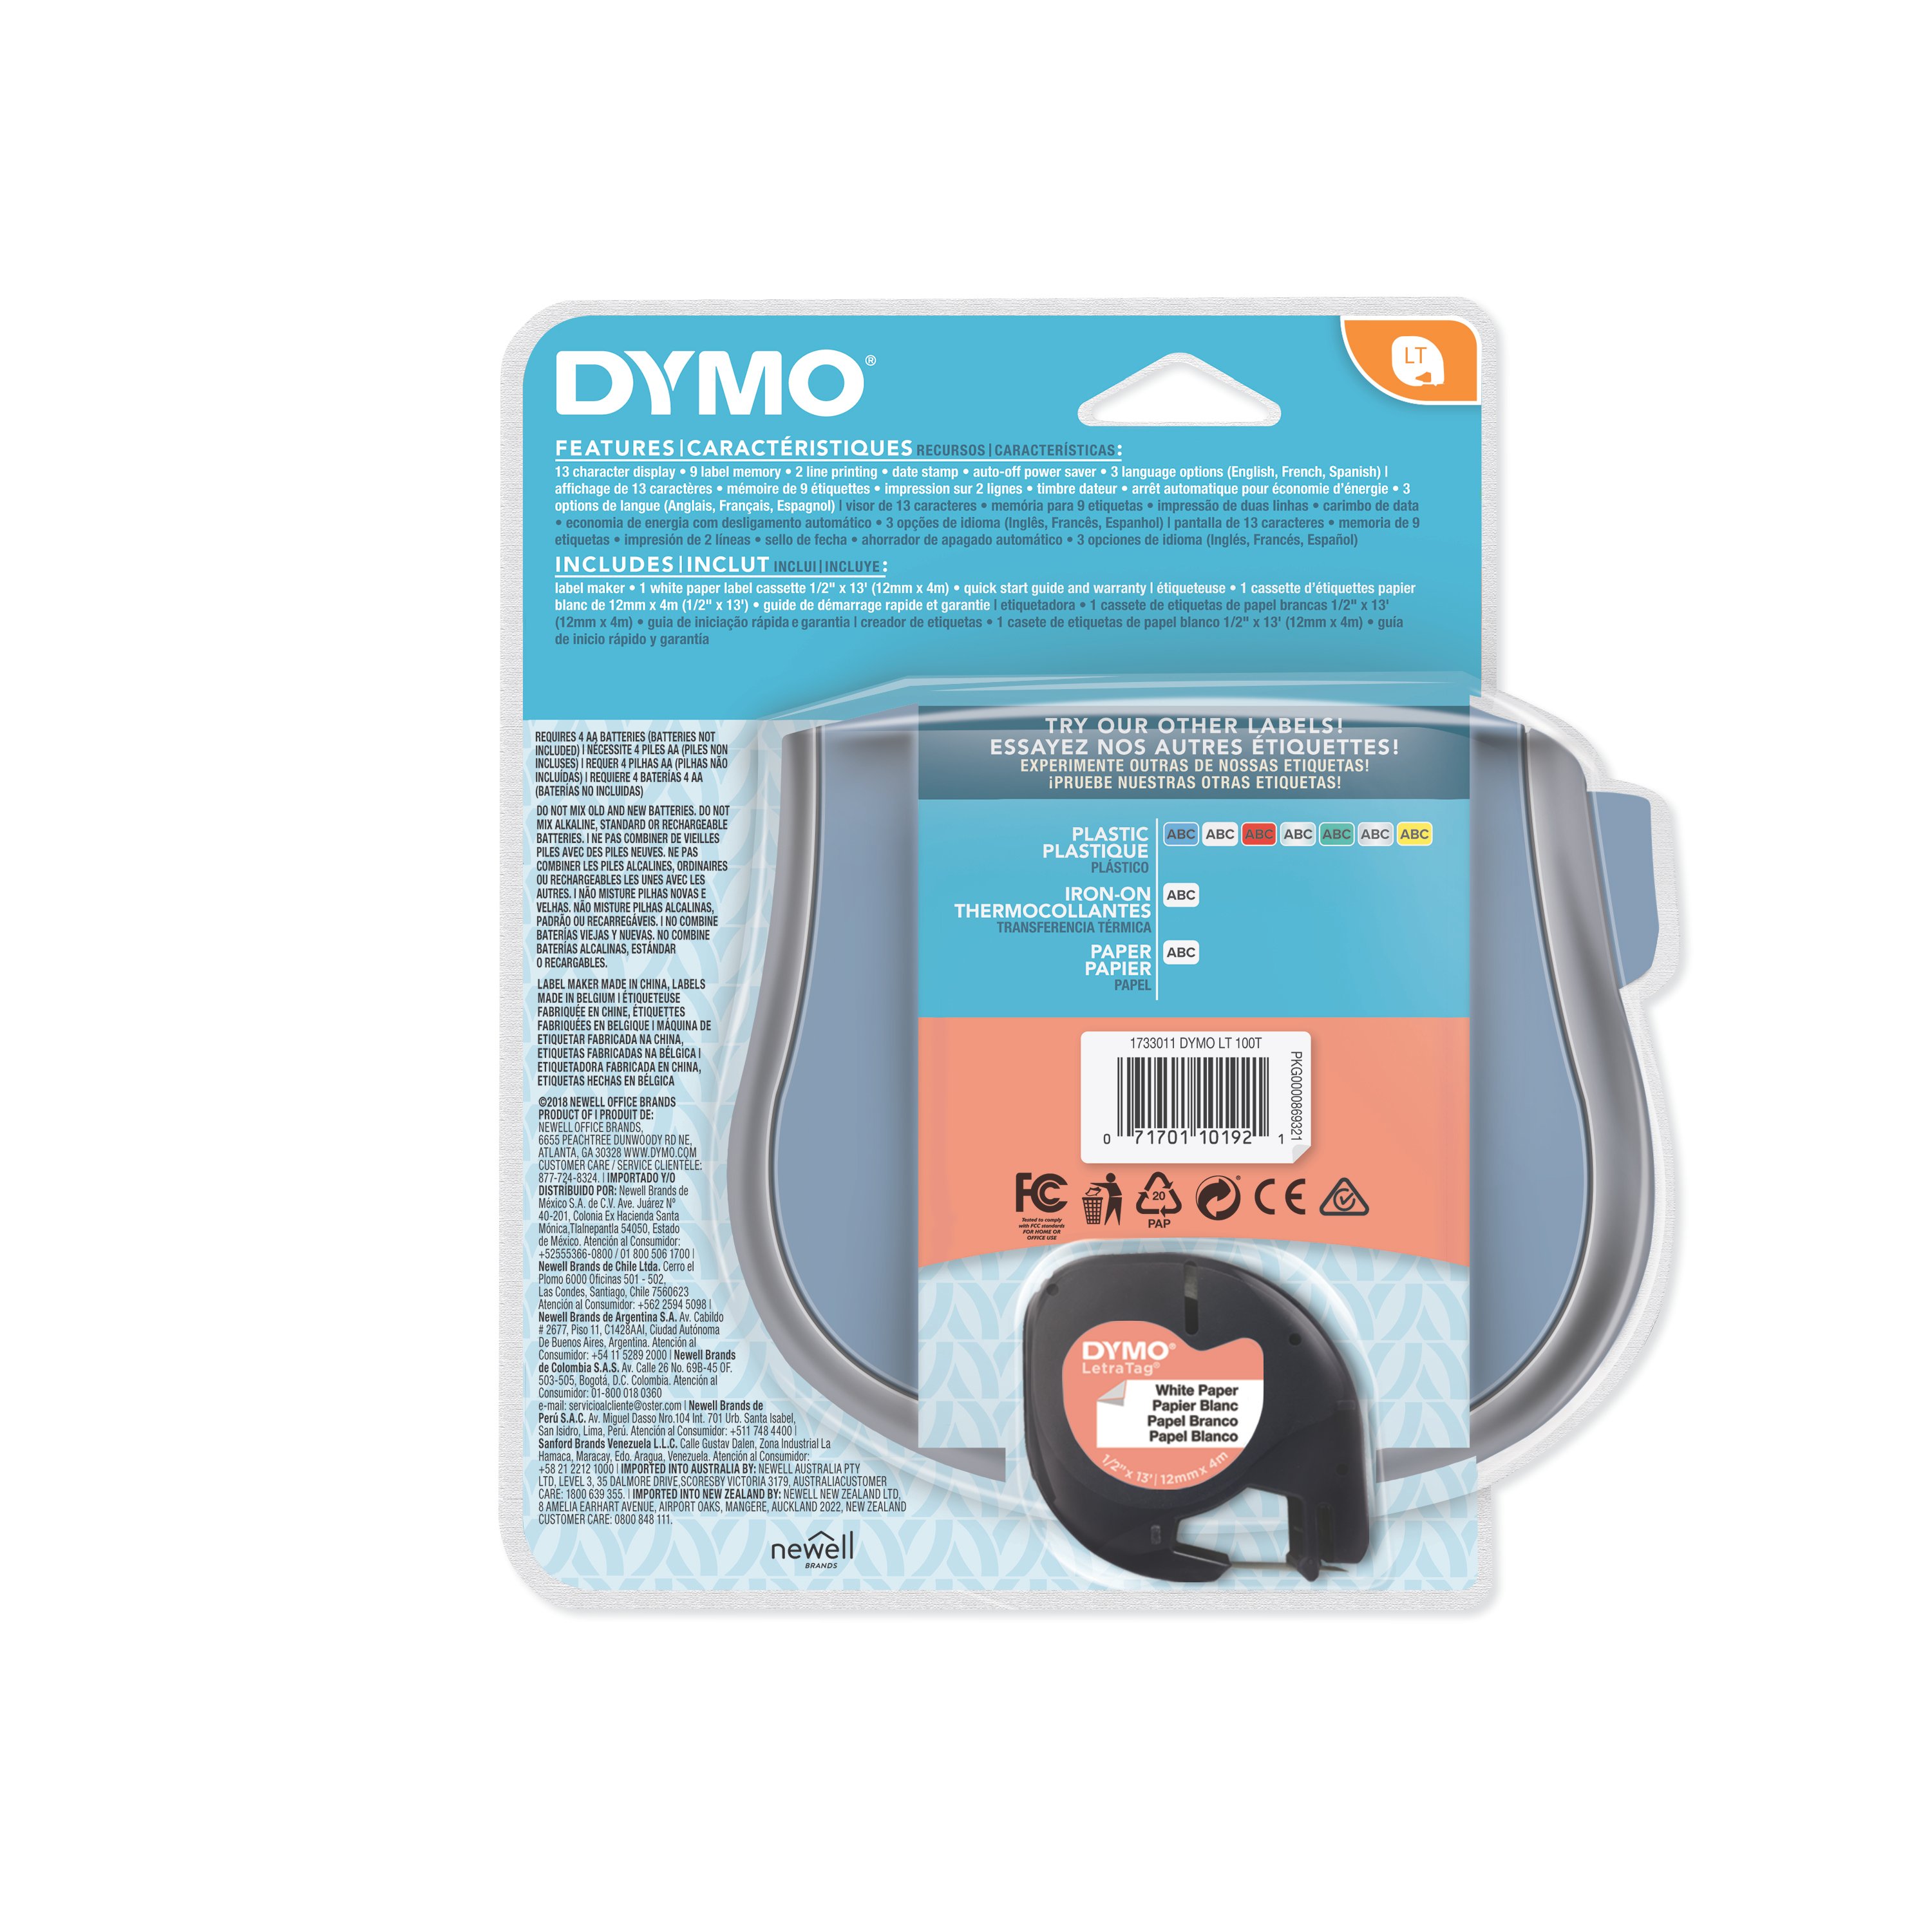 Dymo lt100-t etichettatrice portatile tastiera qwerty